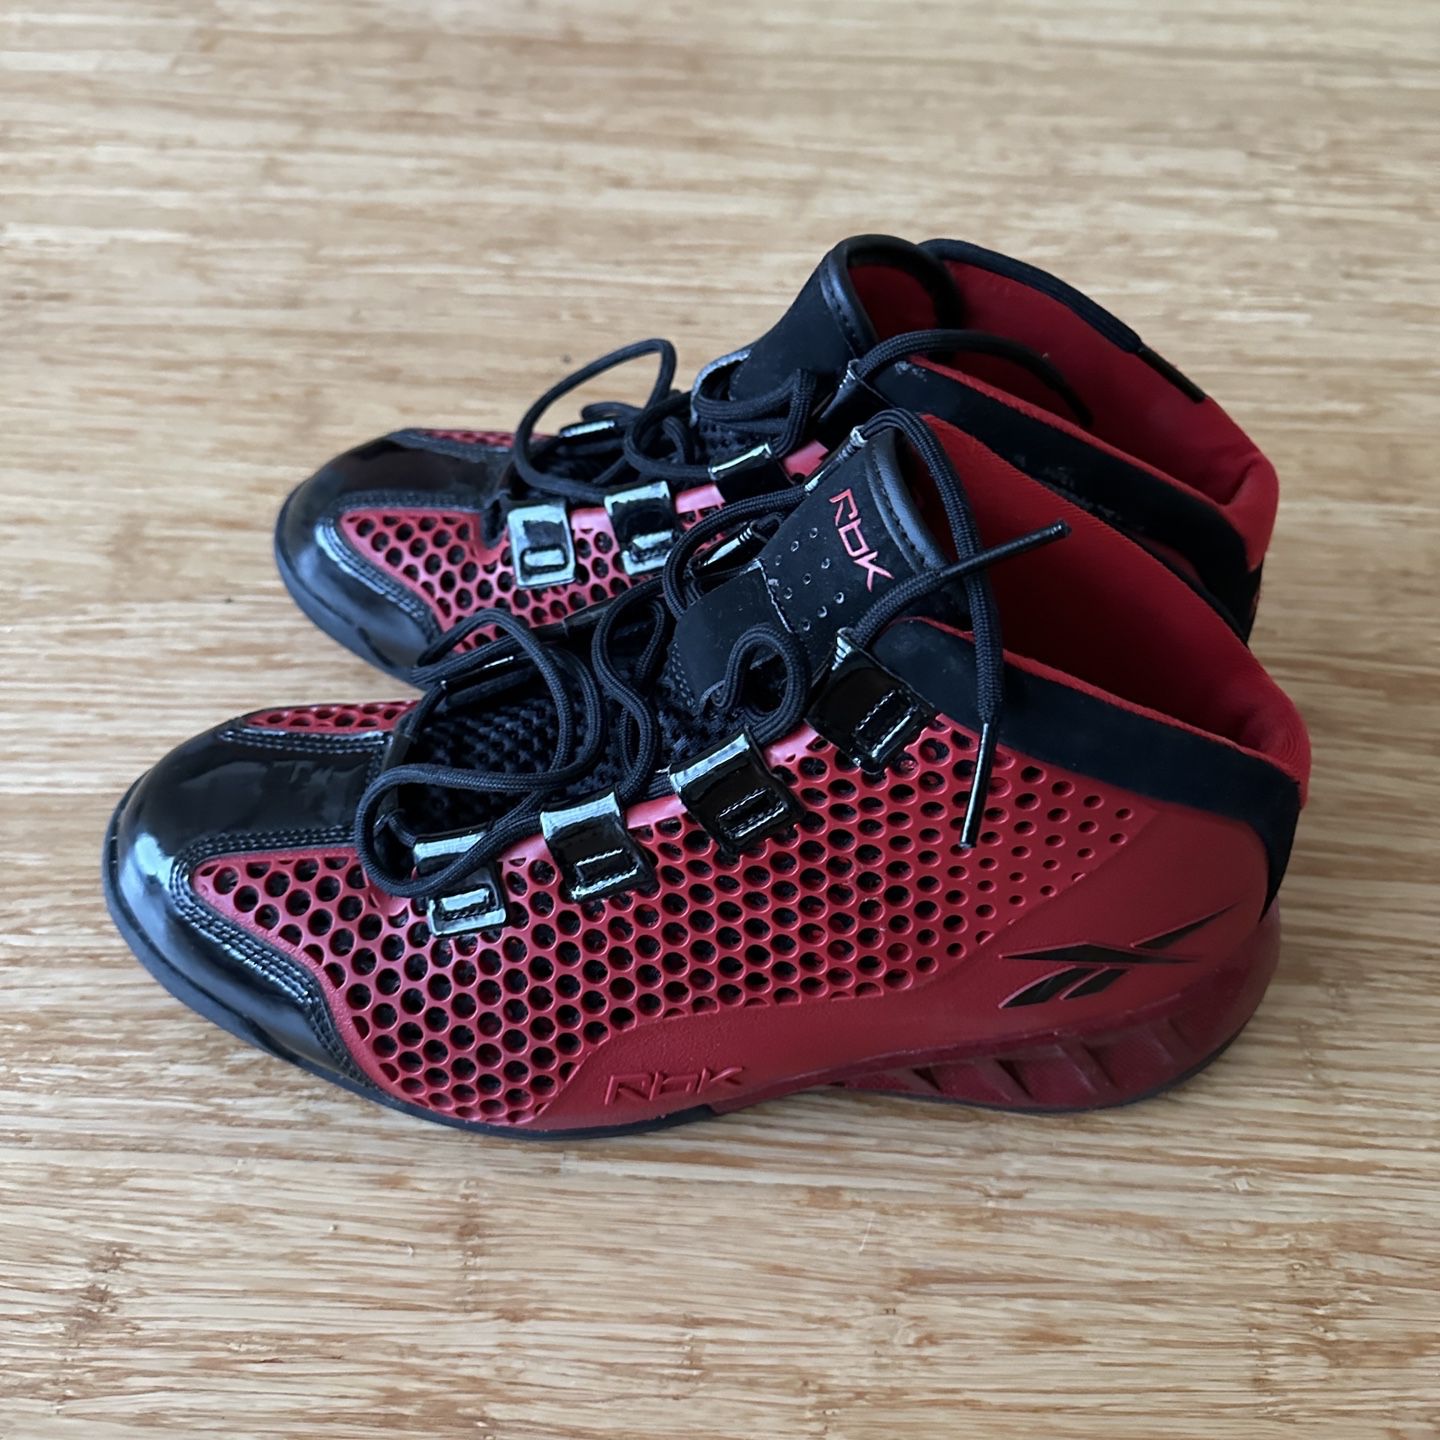 RBX Lebron VII Christmas Basketball shoes - Size 10